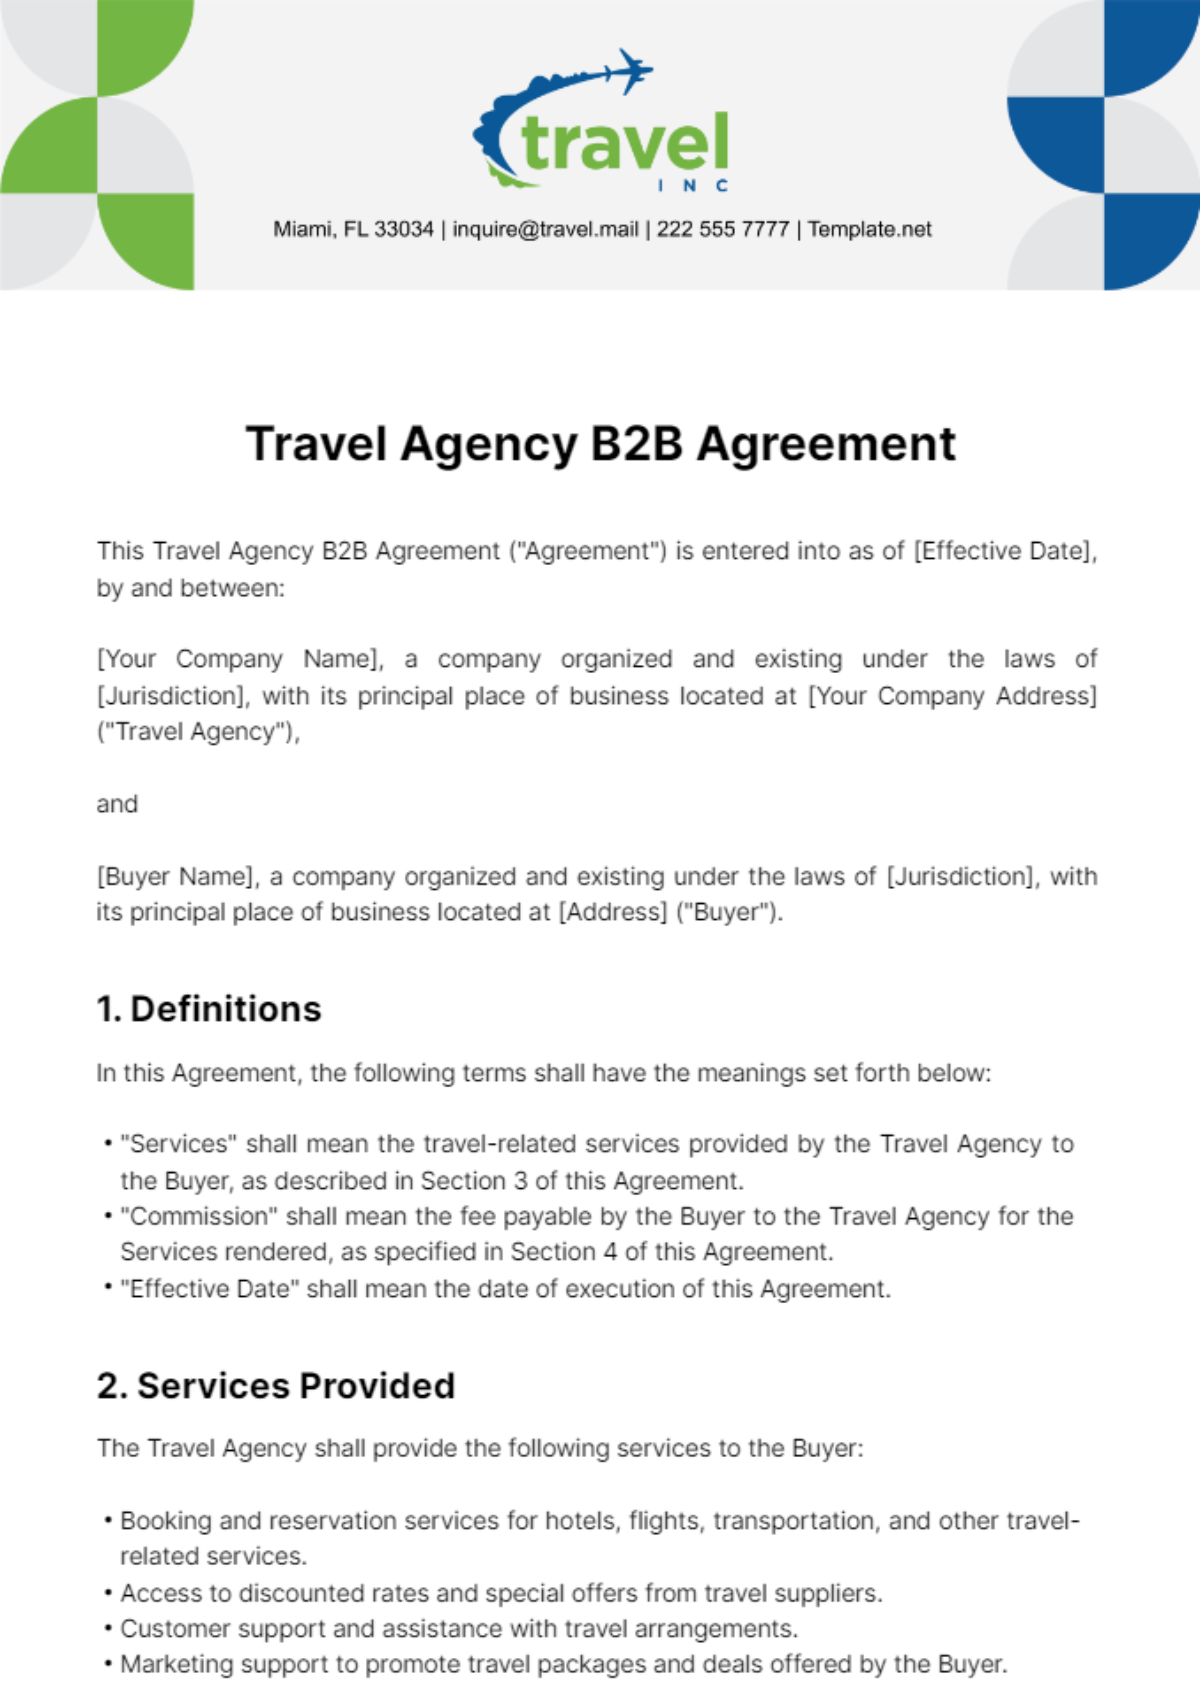 Free Travel Agency B2B Agreement Template